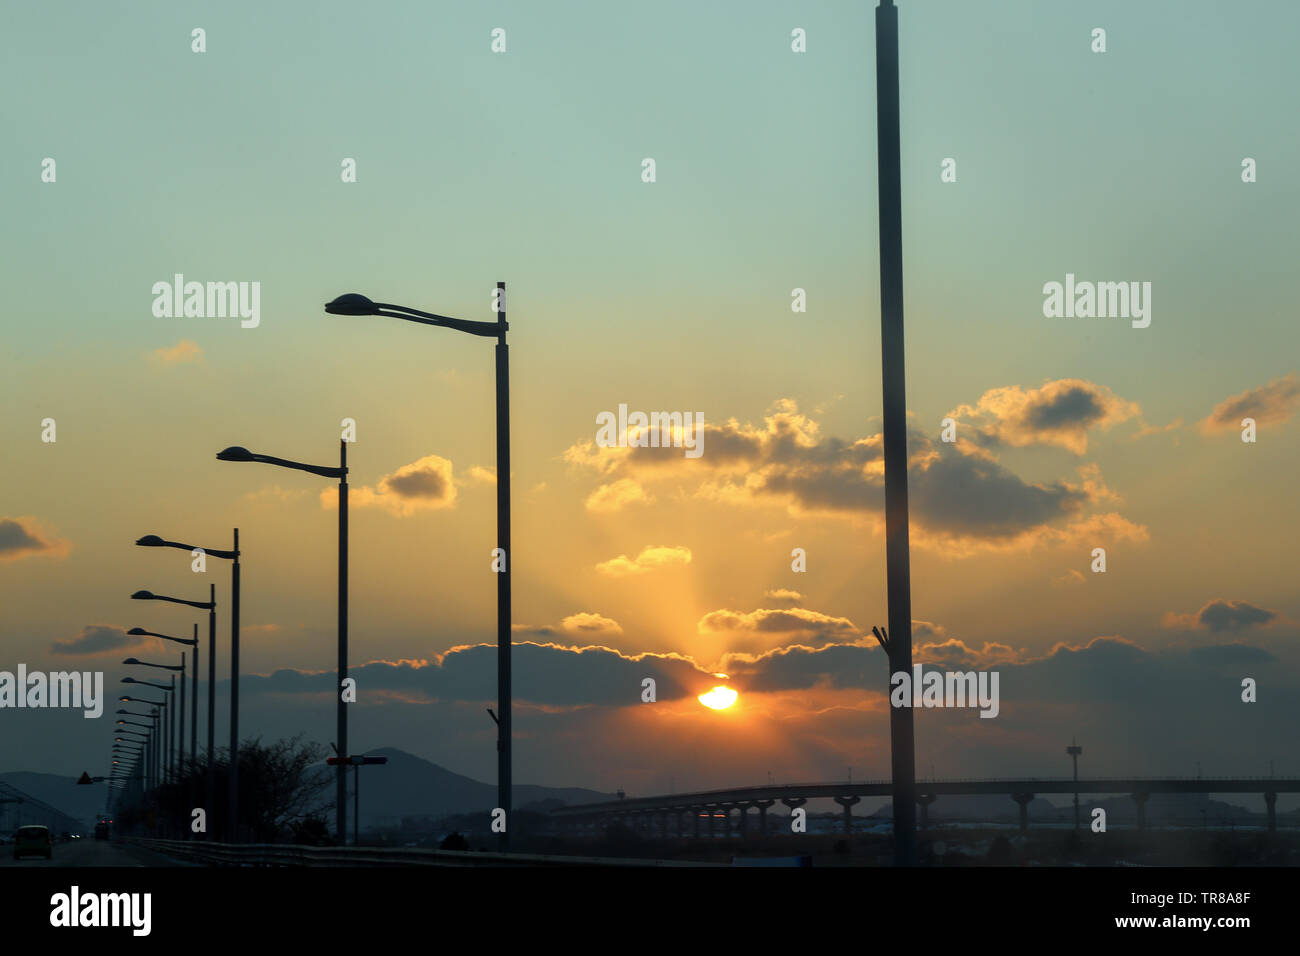 Sun is setting on the way to Incheon international airport, Incheon South Korea Stock Photo